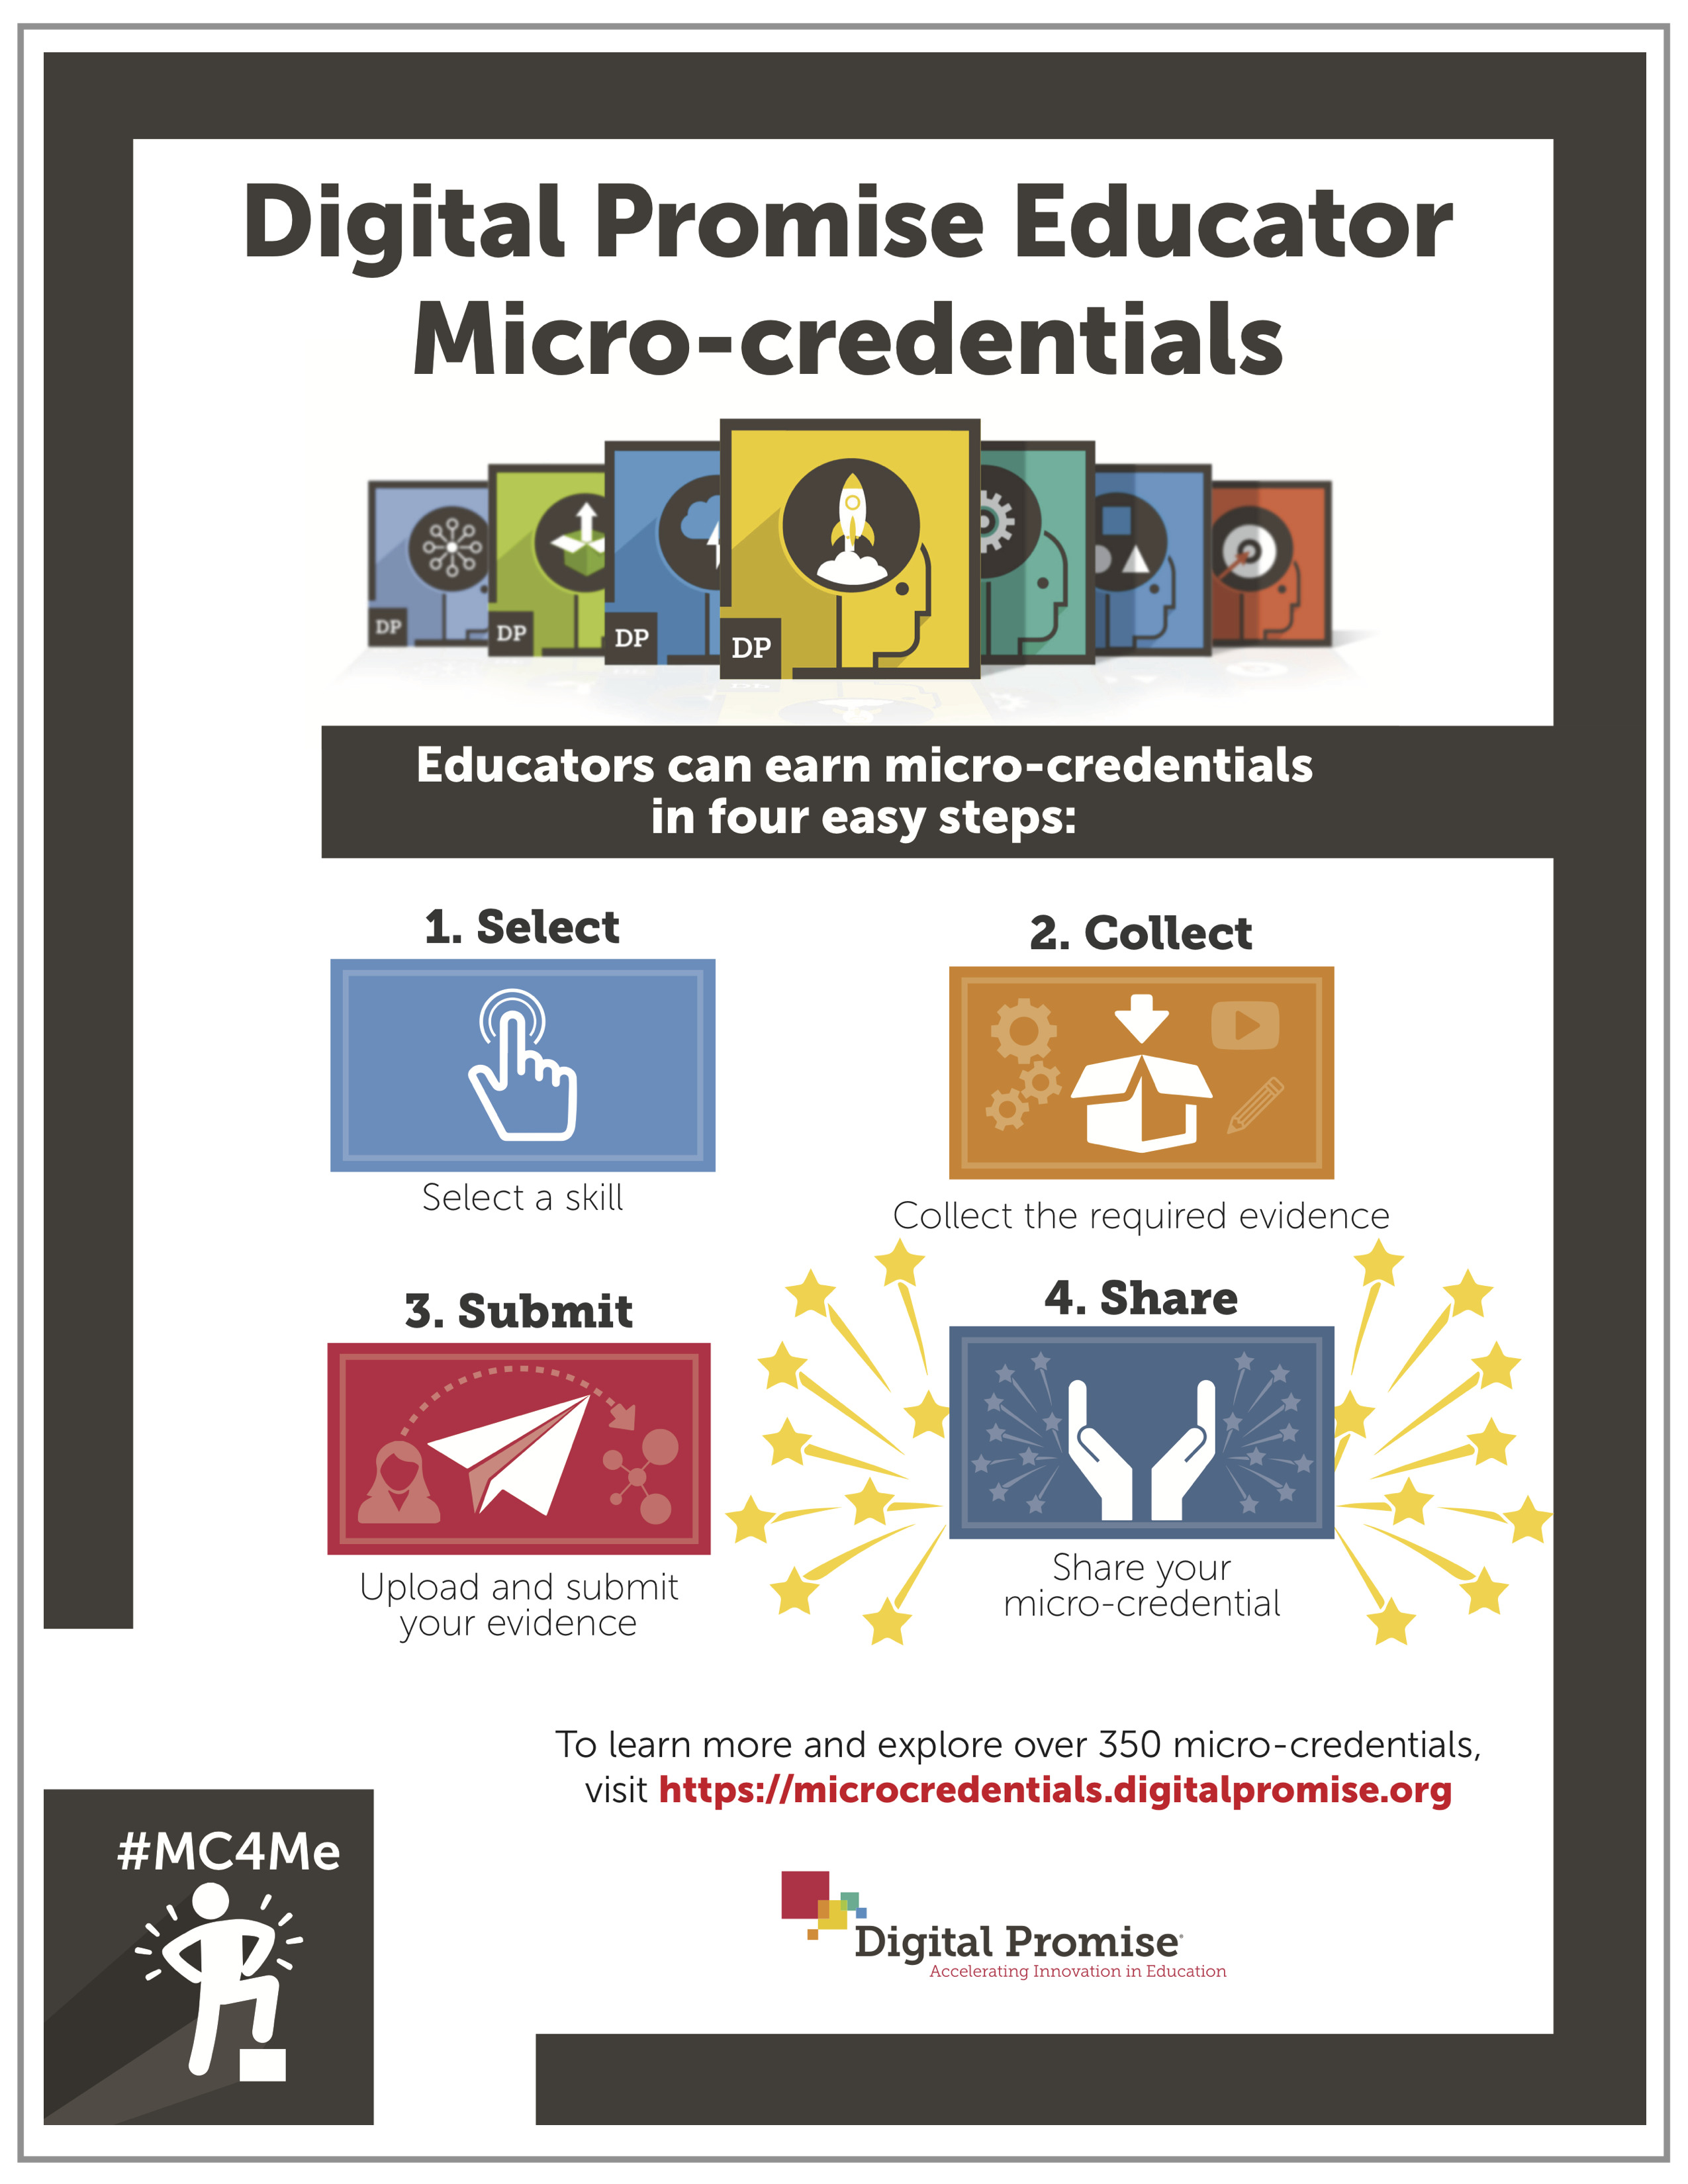 Micro-credentials